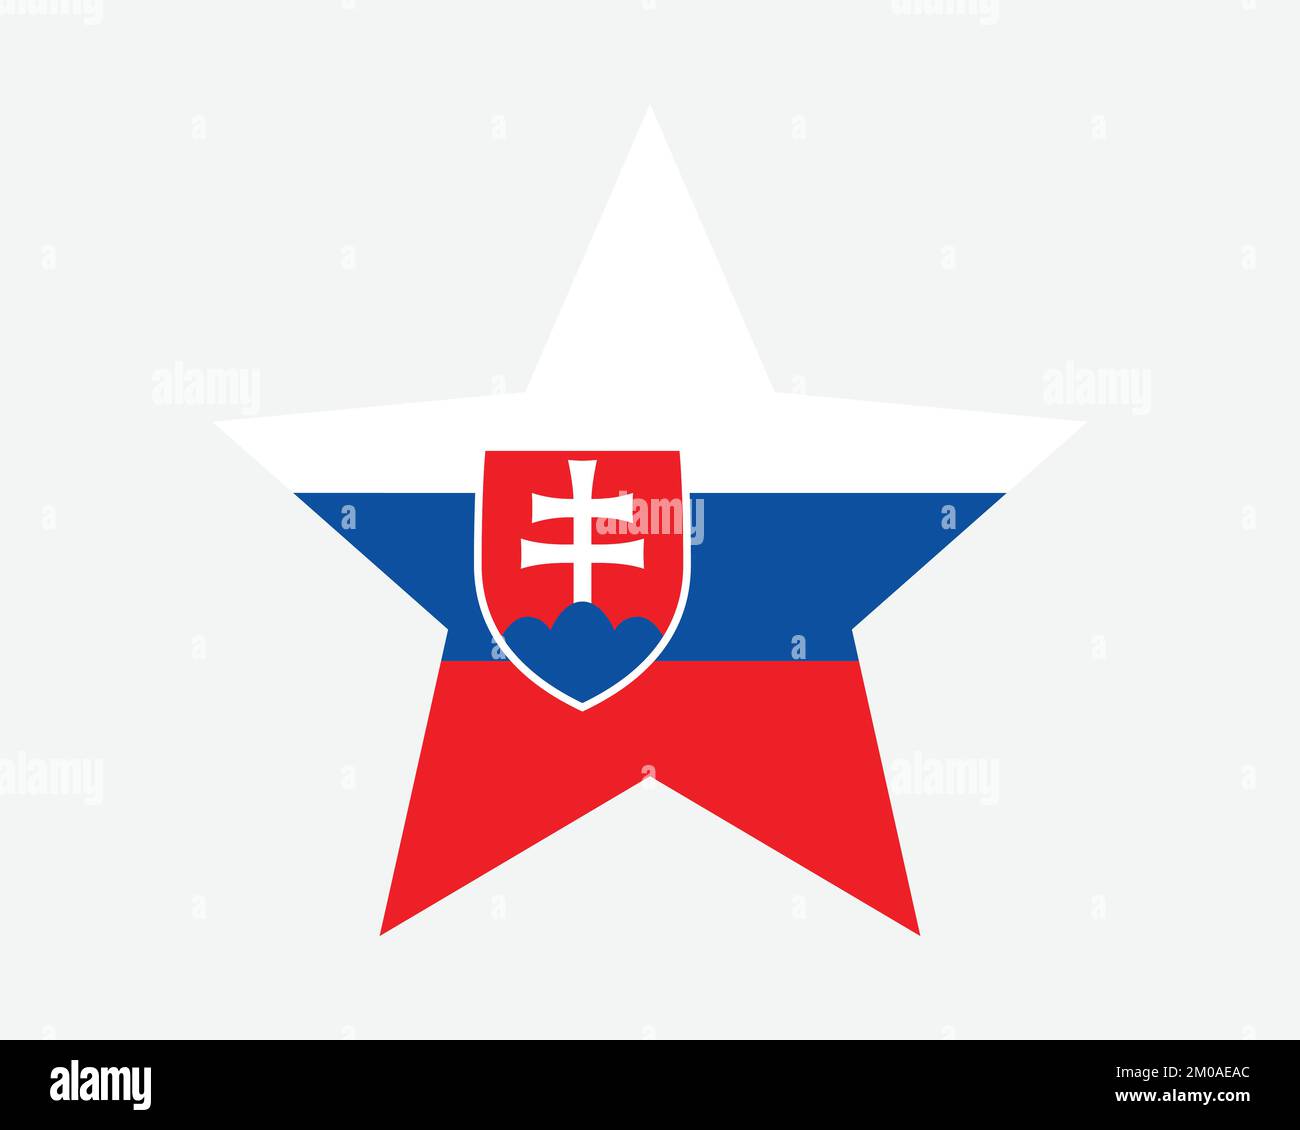 Slovakia Star Flag. Slovak Star Shape Flag. Slovak Republic Country National Banner Icon Symbol Vector Flat Artwork Graphic Illustration Stock Vector